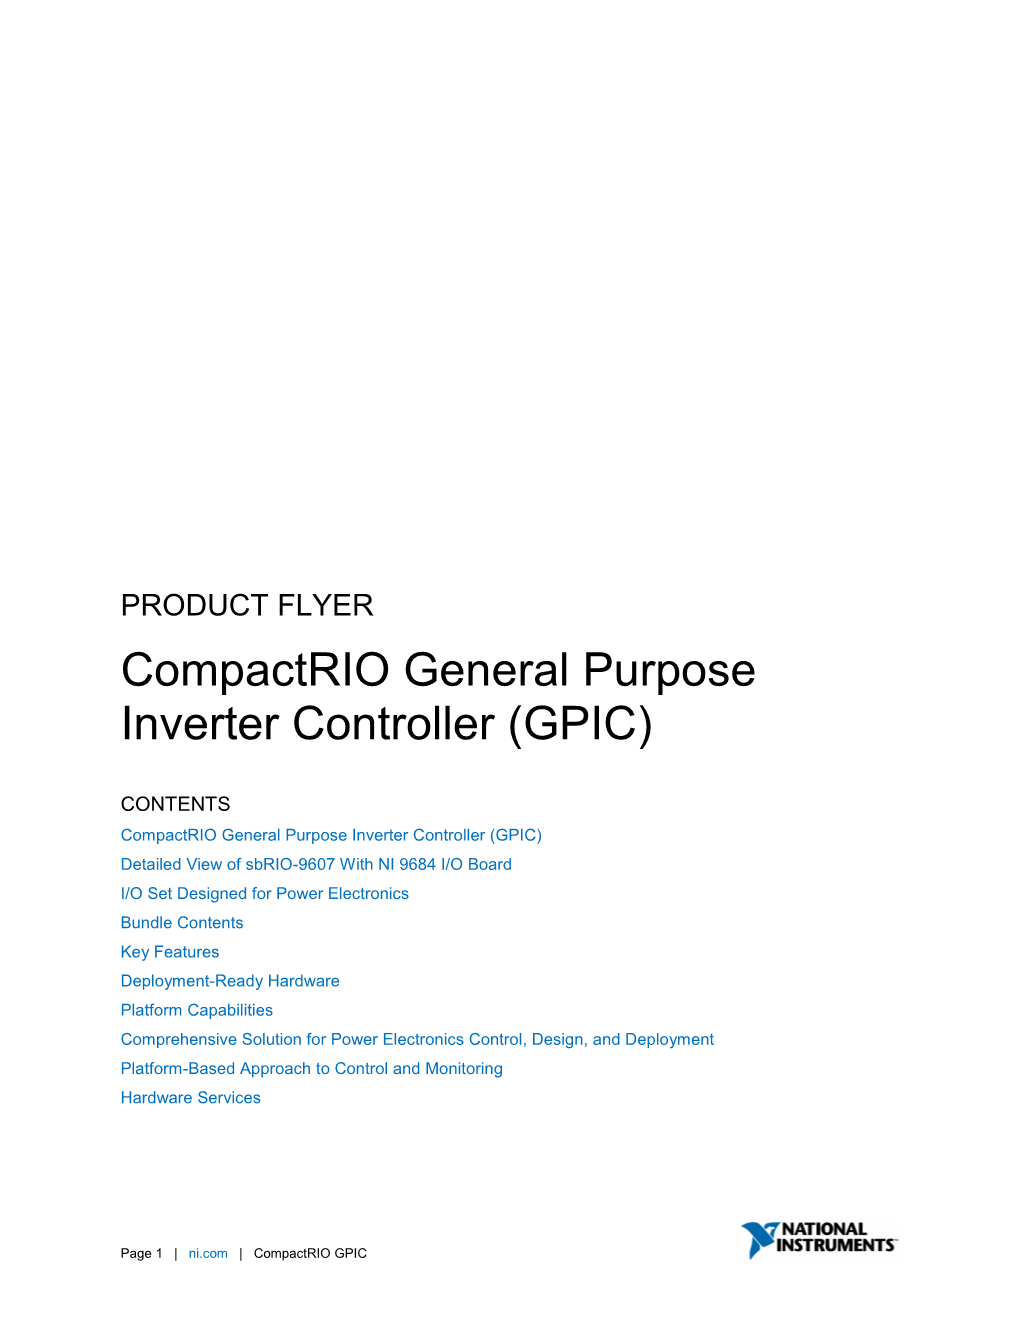 Compactrio General Purpose Inverter Controller (GPIC)